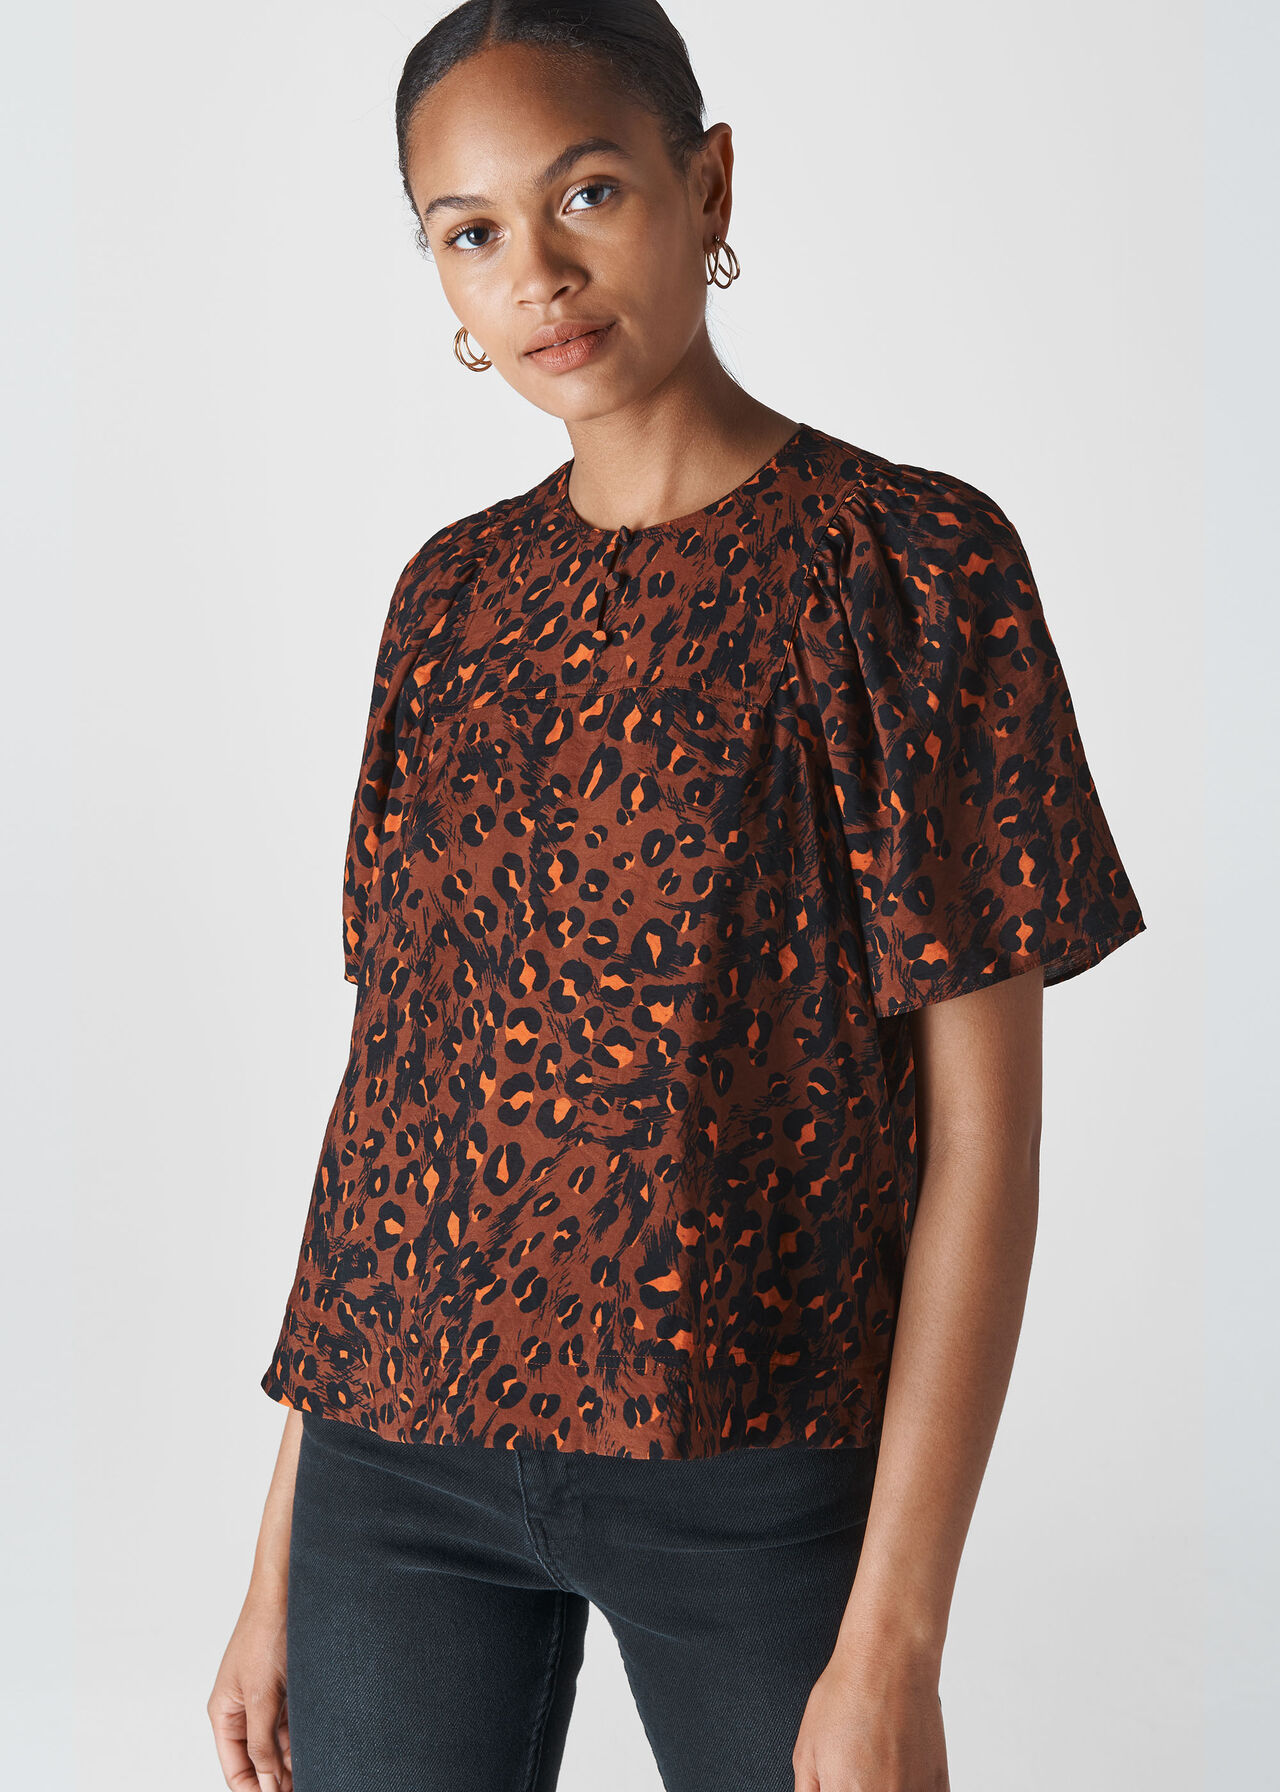 Brushed Leopard Print Top Brown/Multi